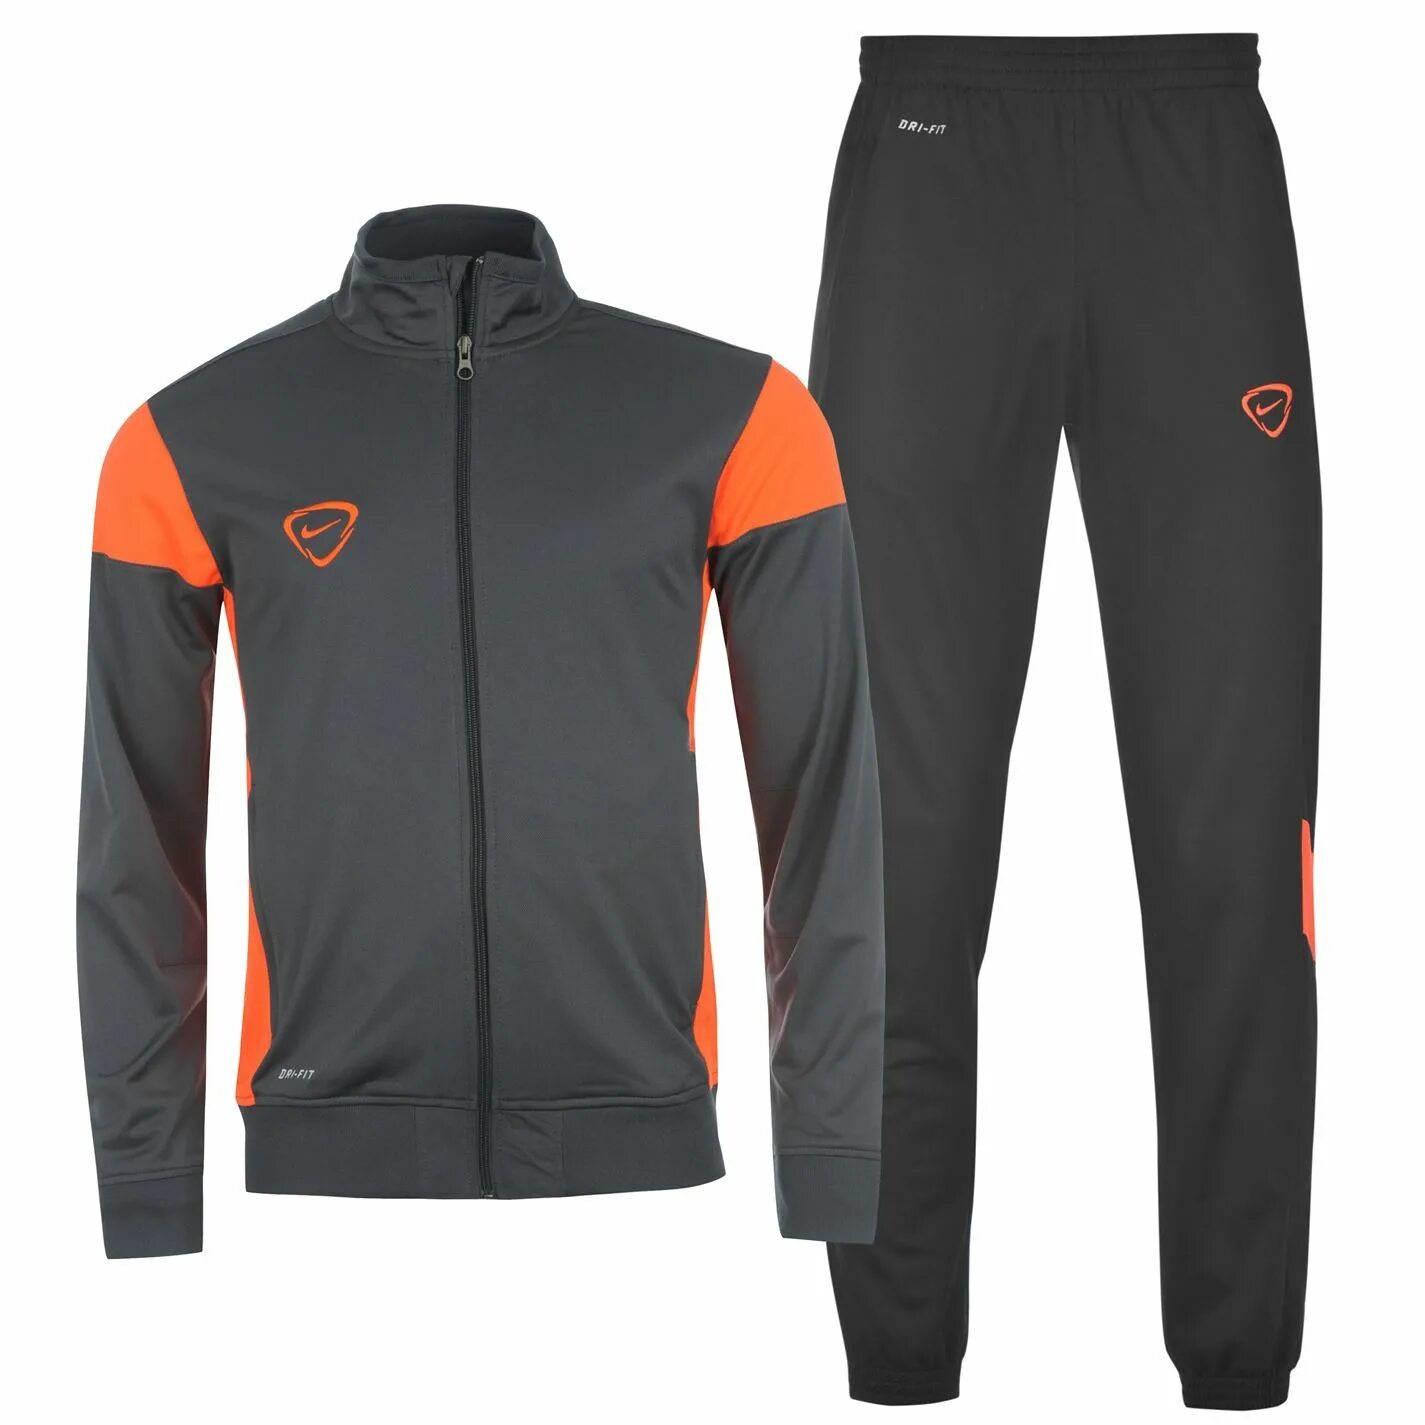 Nike Academy Tracksuit Mens. Оранжевый спортивный костюм мужской. Мужской спортивный костюм черный с оранжевым. Спортивный костюм черно оранжевый.